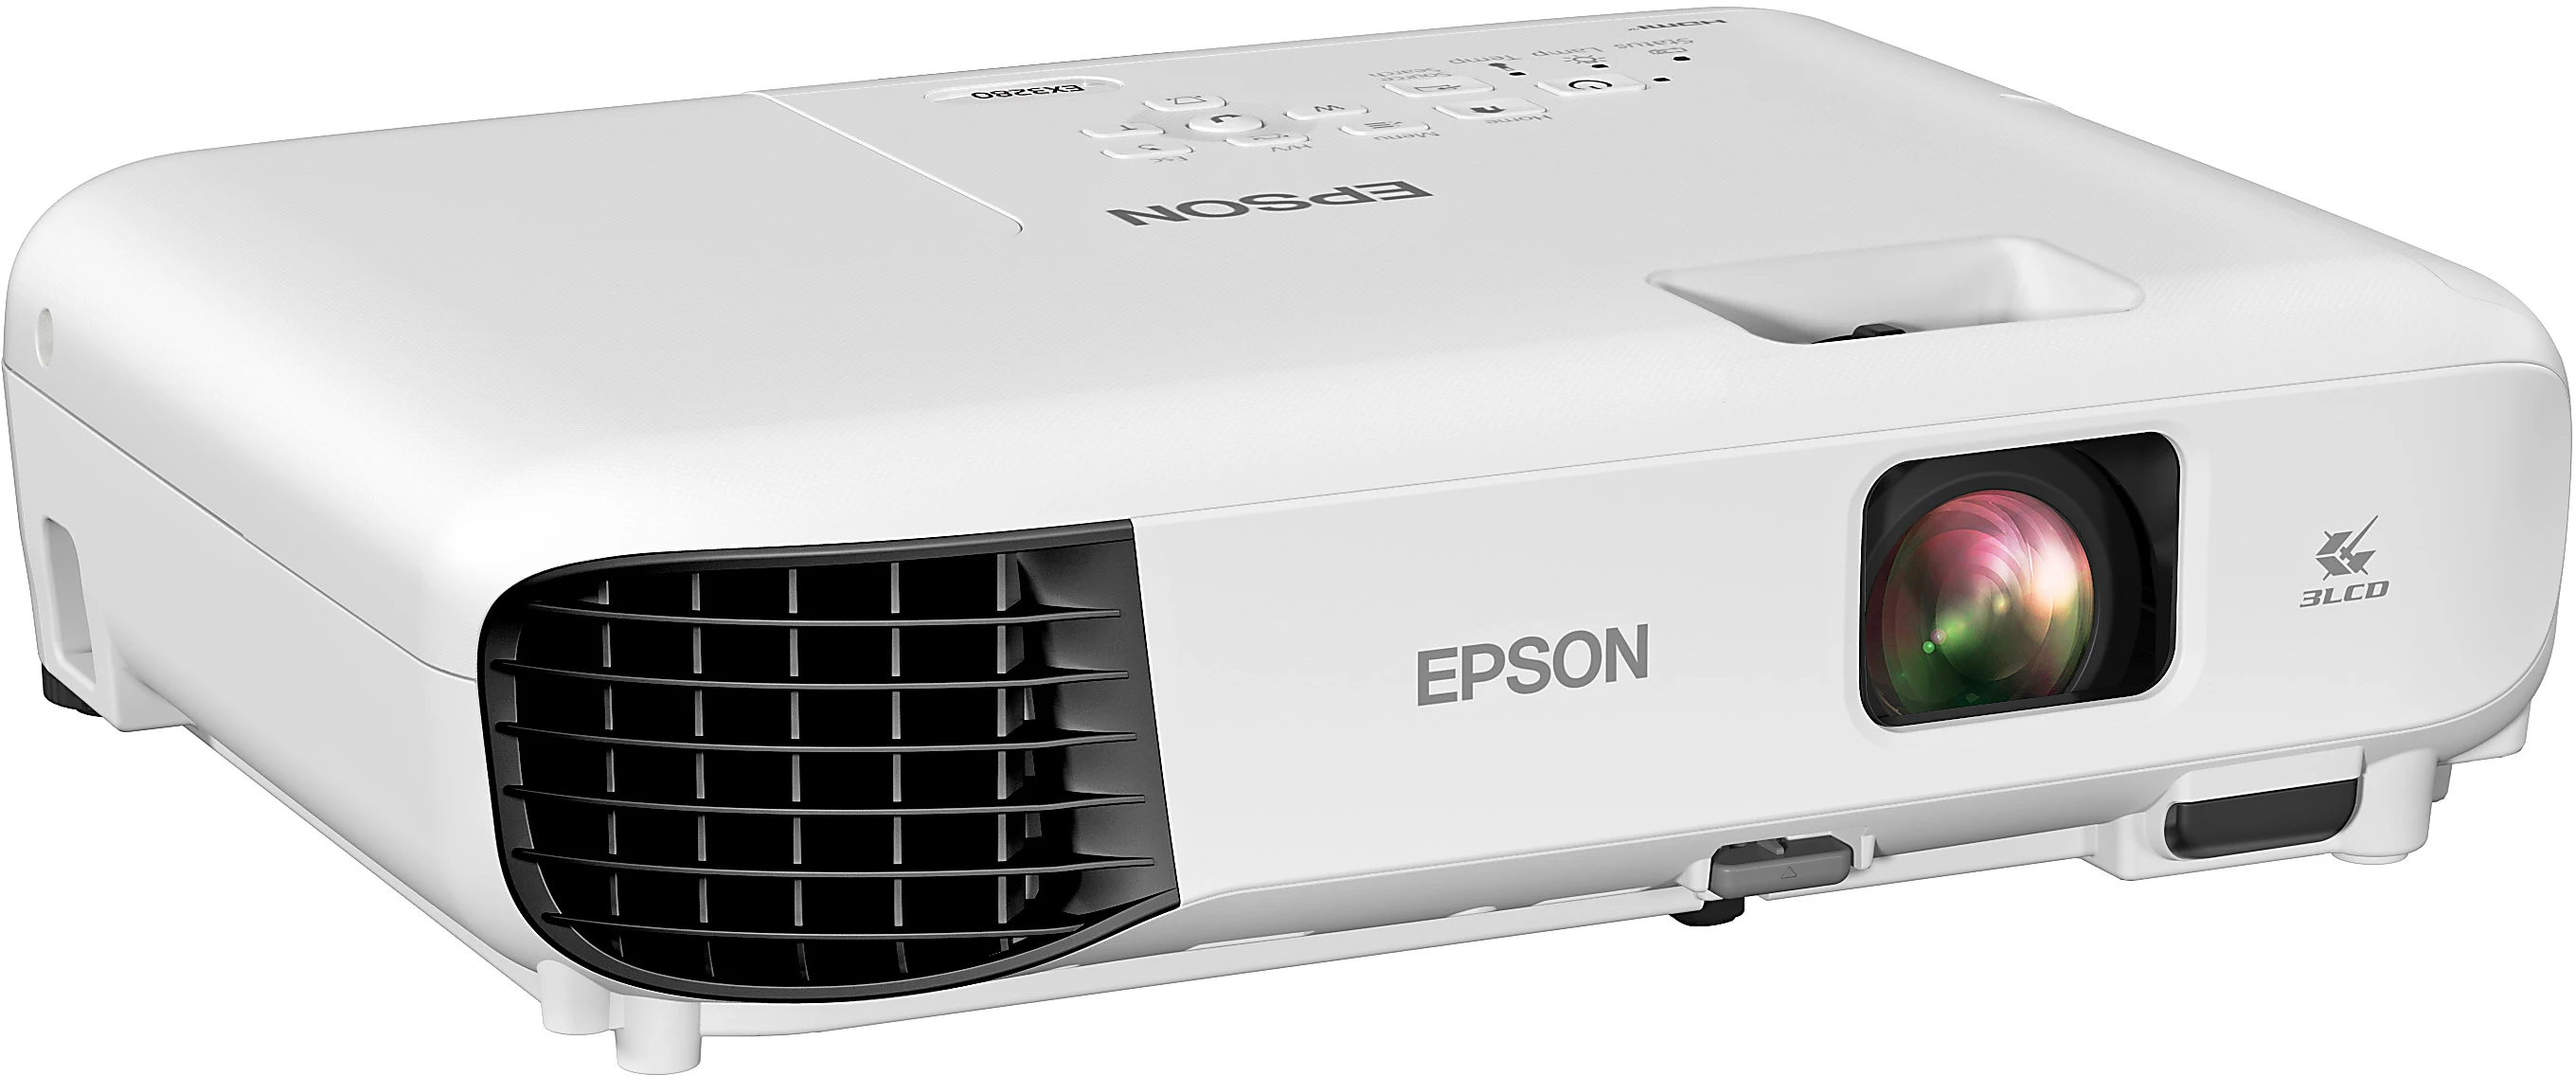 Epson Projector main image